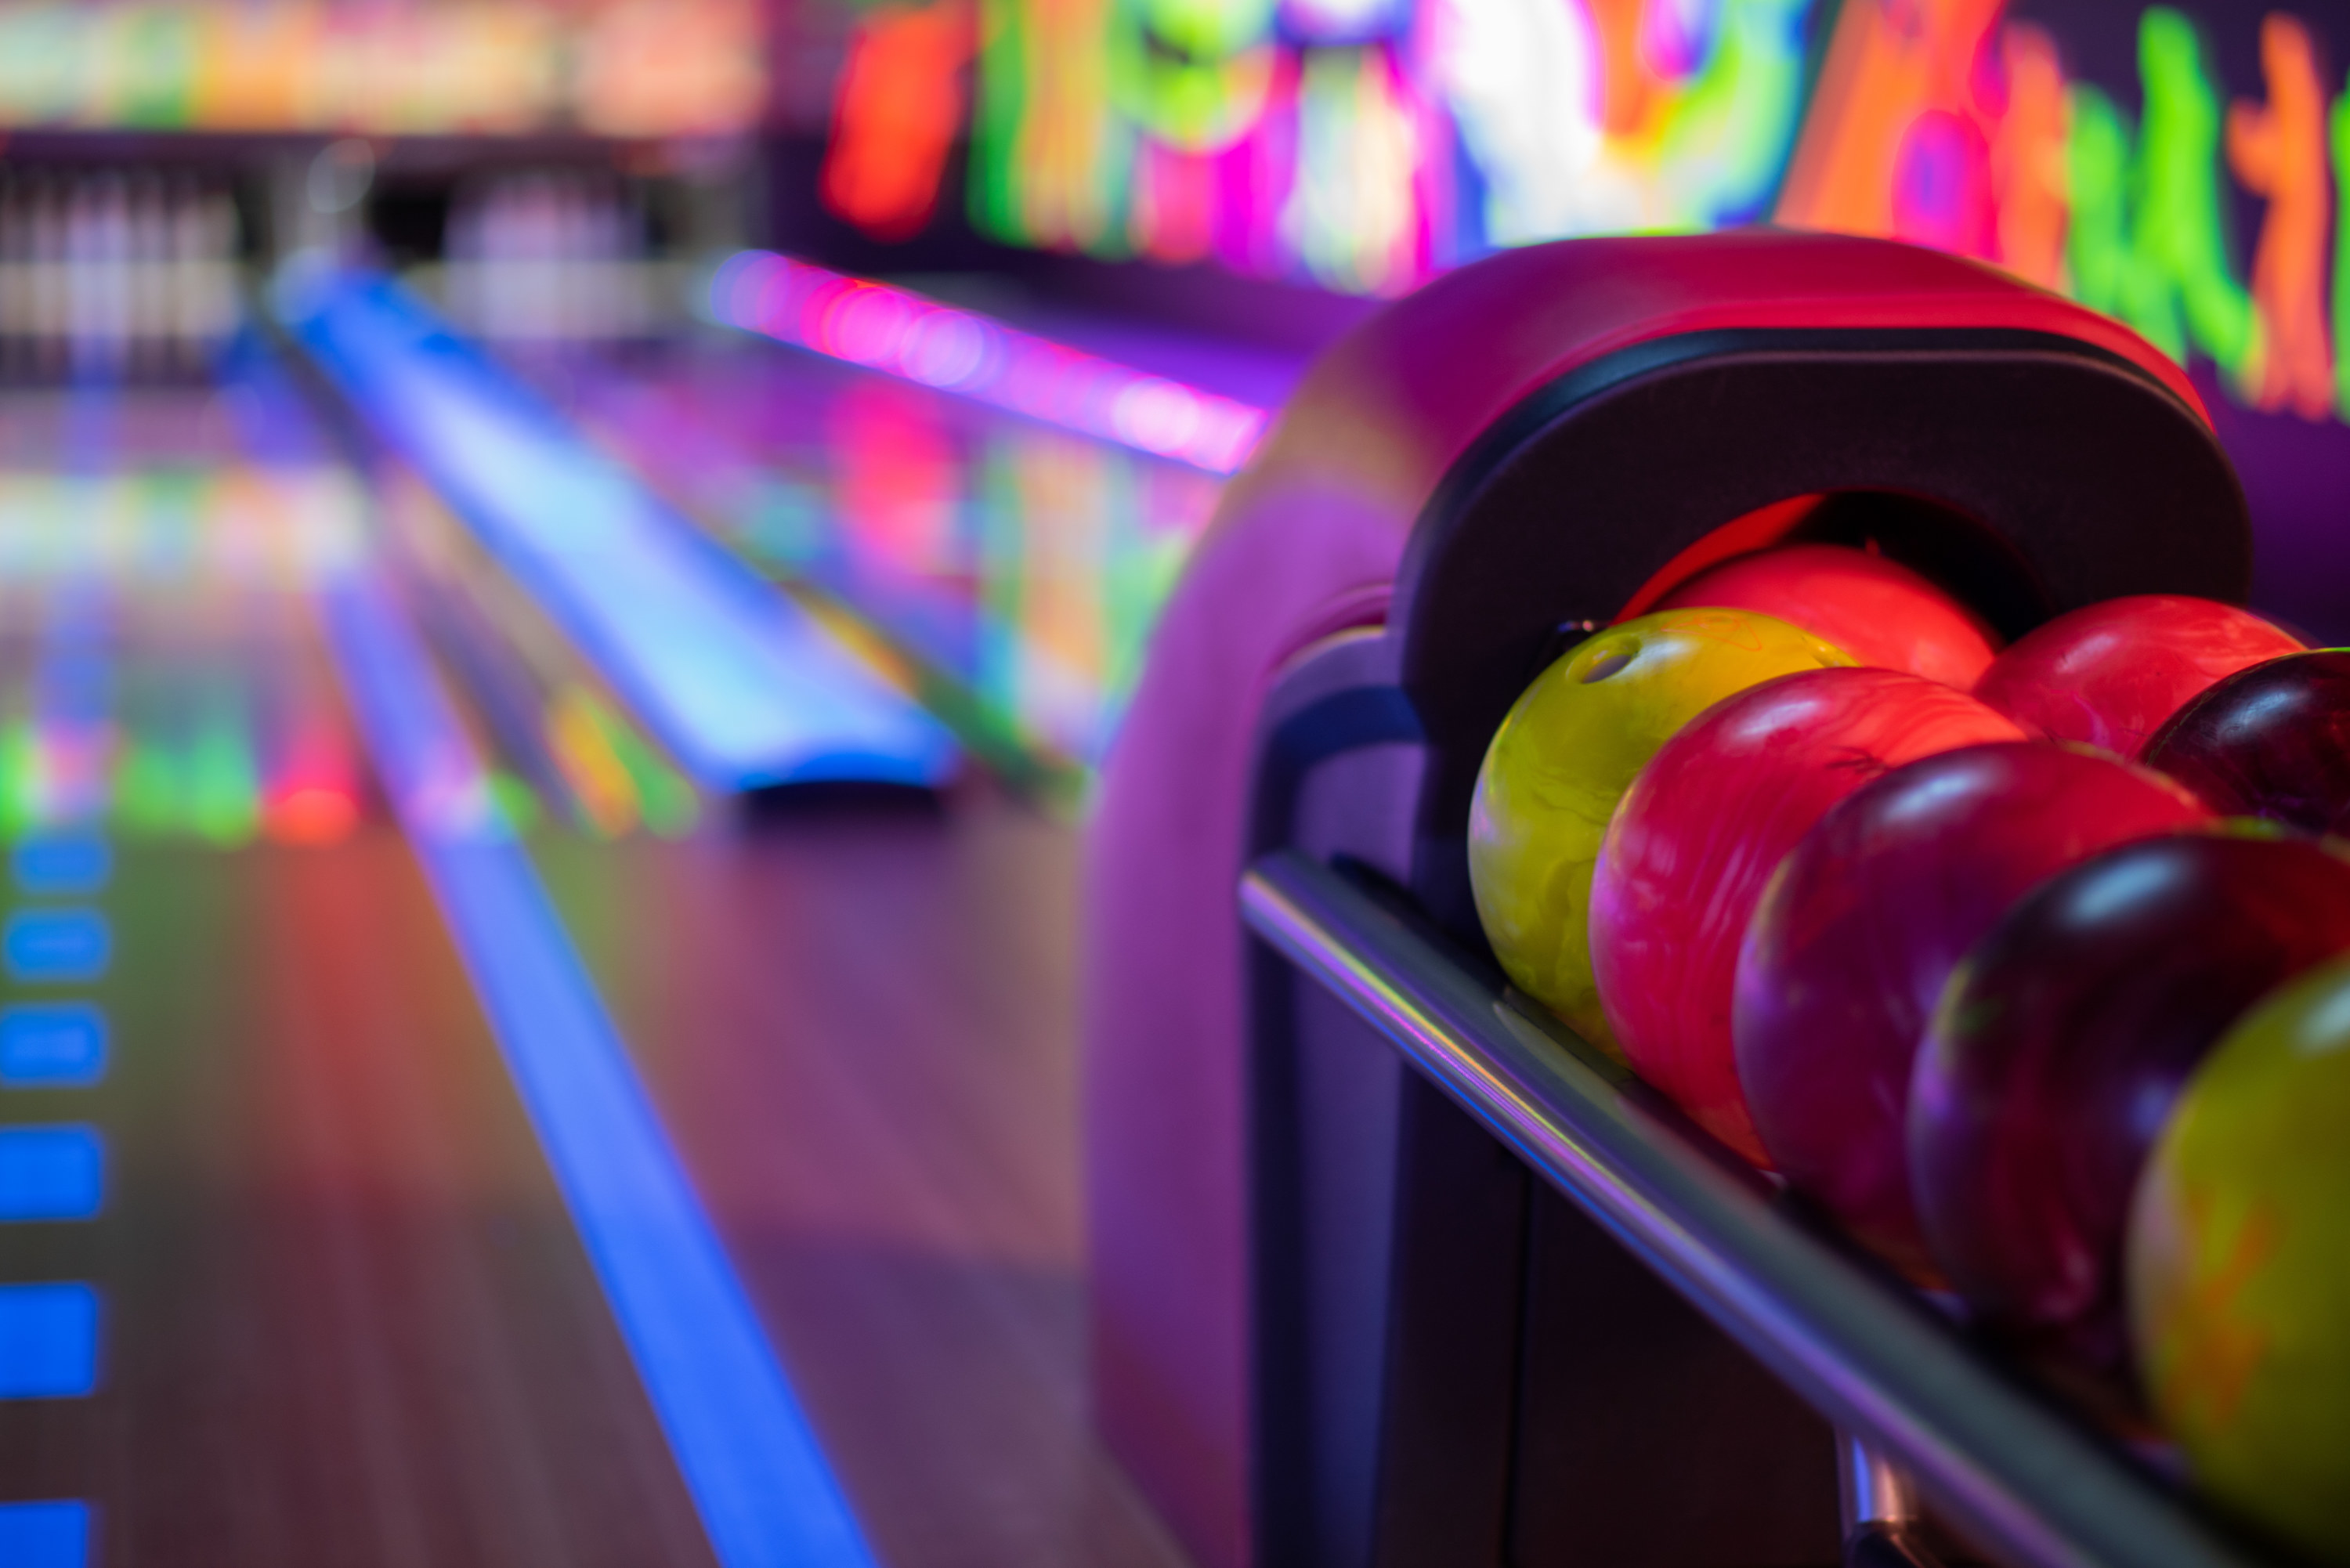 An up-close shot of bowling balls at a bowling alley